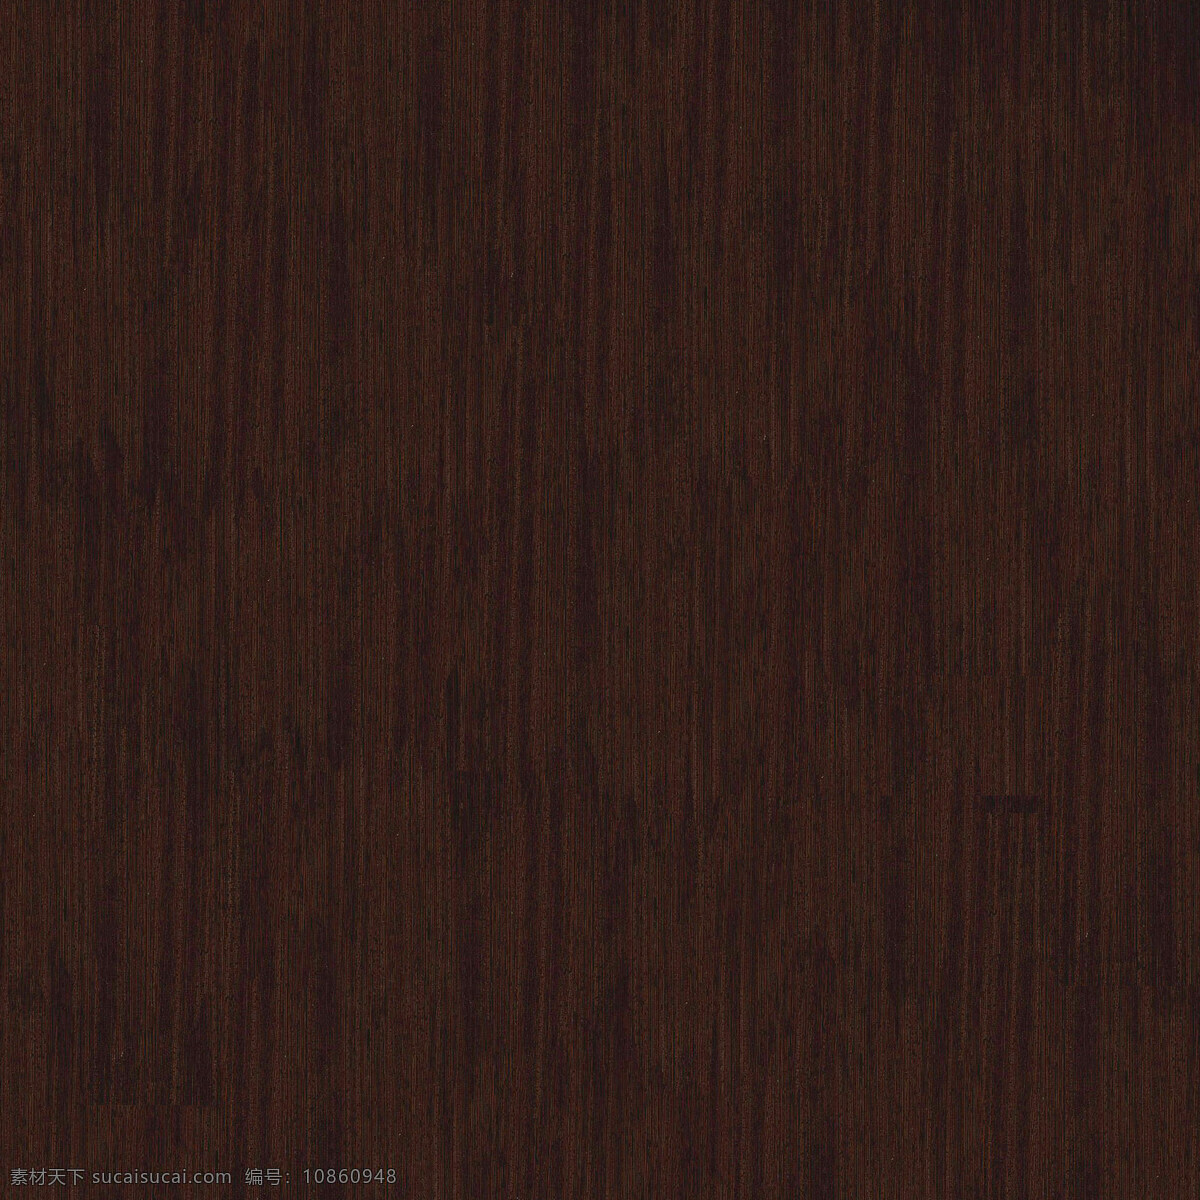 vray 木纹 材质 max9 光滑 木材 深褐色 有贴图 抛光 3d模型素材 材质贴图